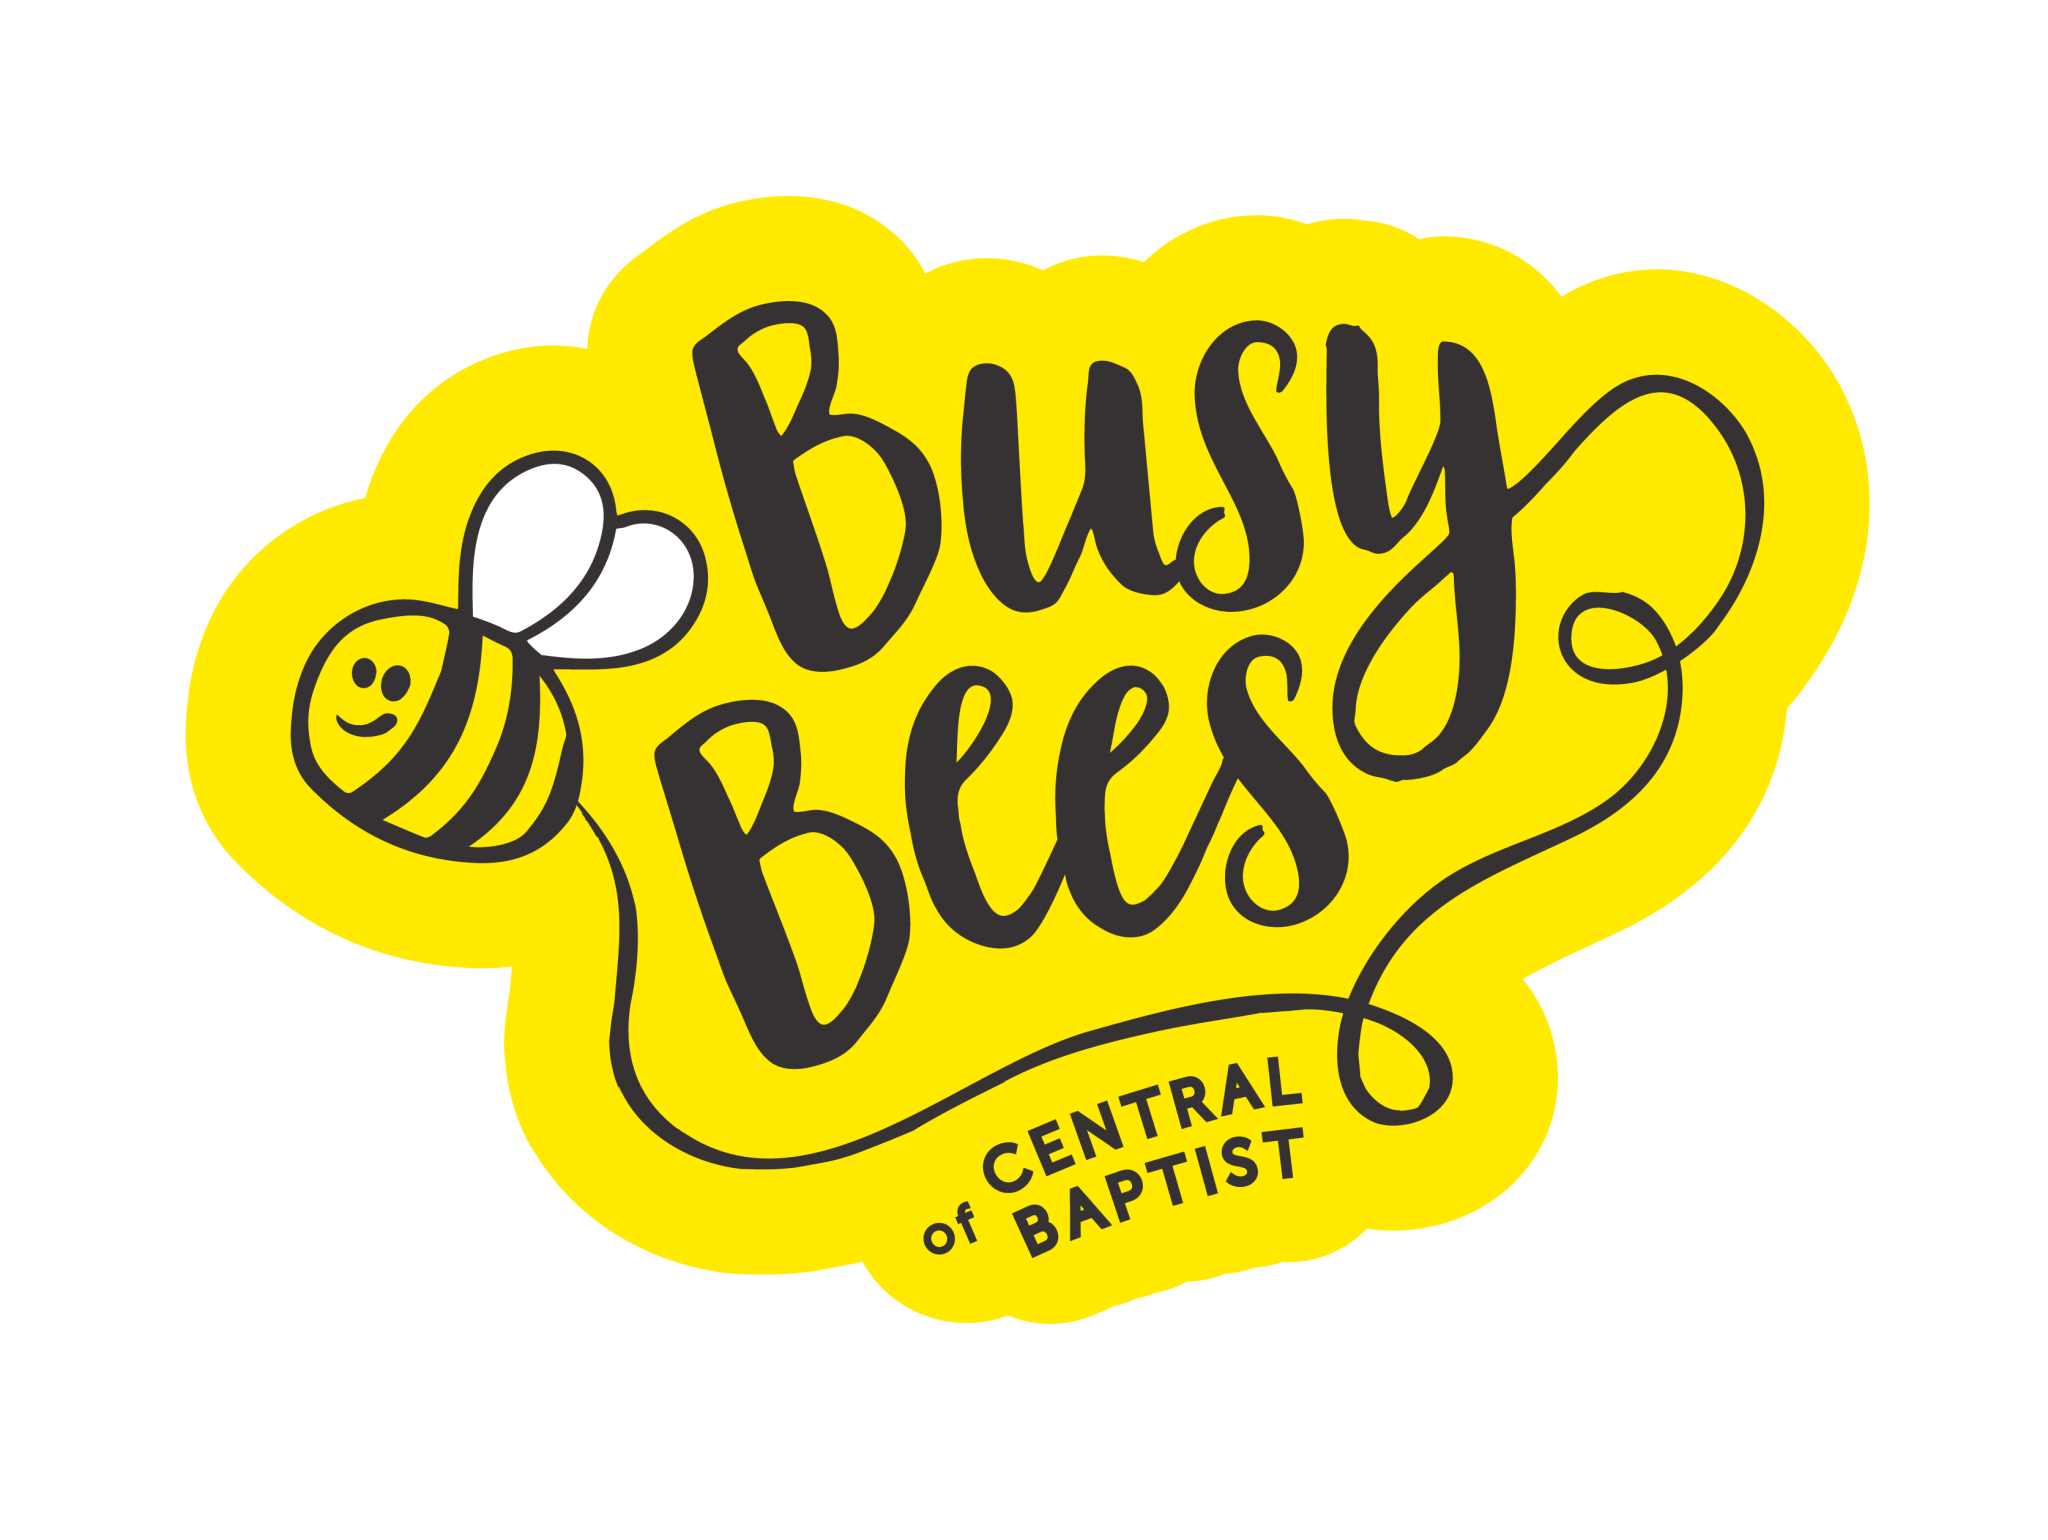 busy-bees-preschool-playgroup-central-baptist-church-invercargill